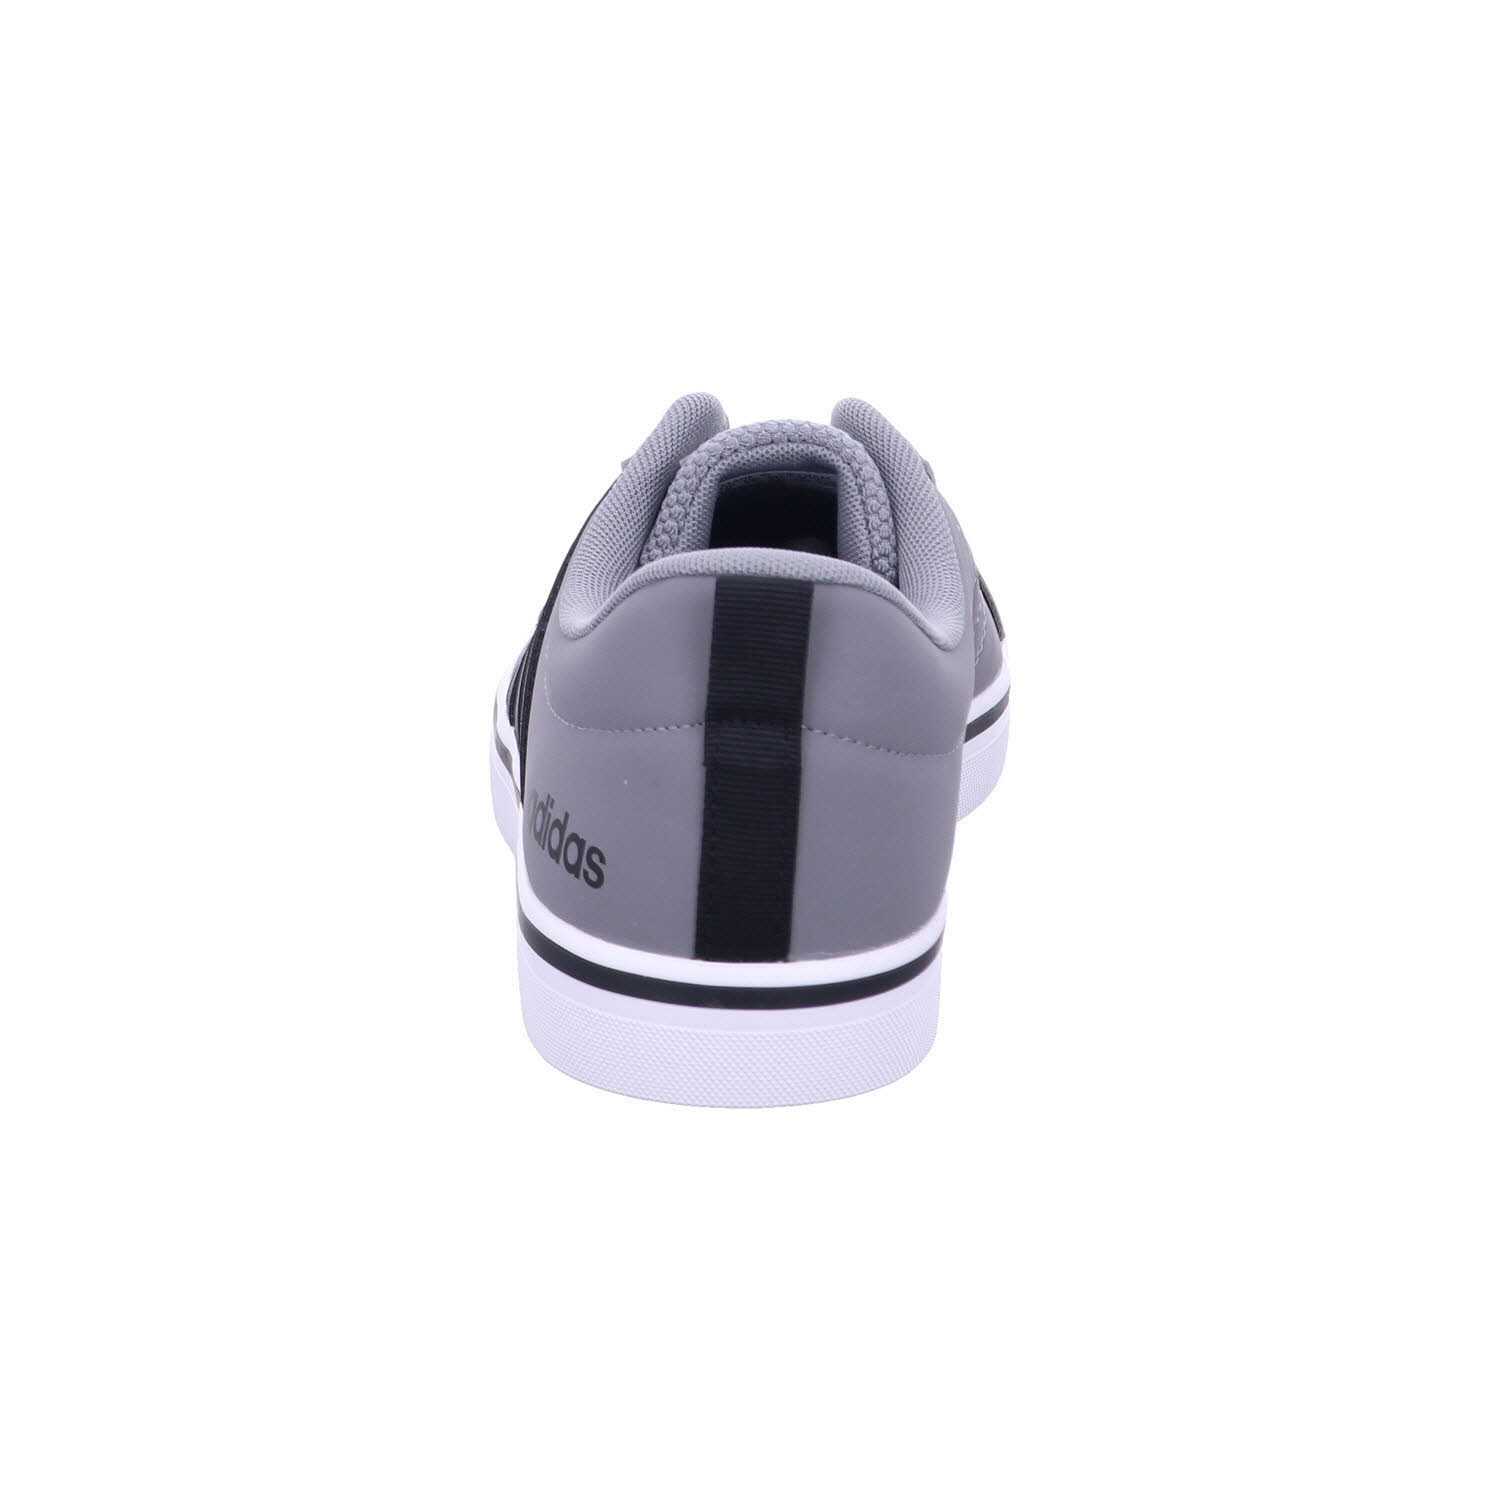 Adidas Sneaker HP6007